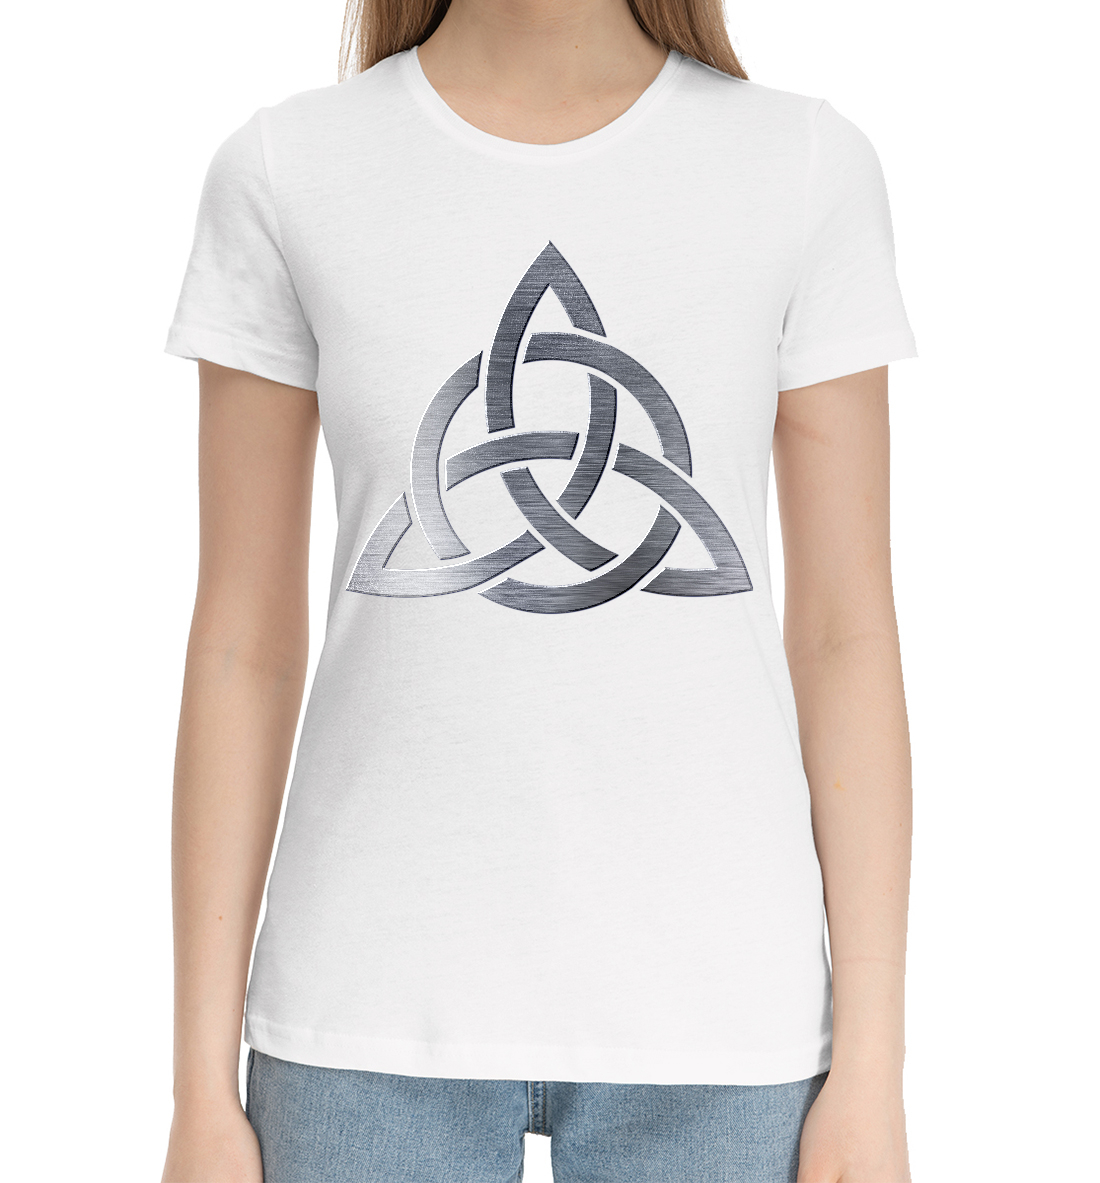 Женская Хлопковая футболка с принтом Оберег Молвинец, артикул SVN-337707-hfu-1mp